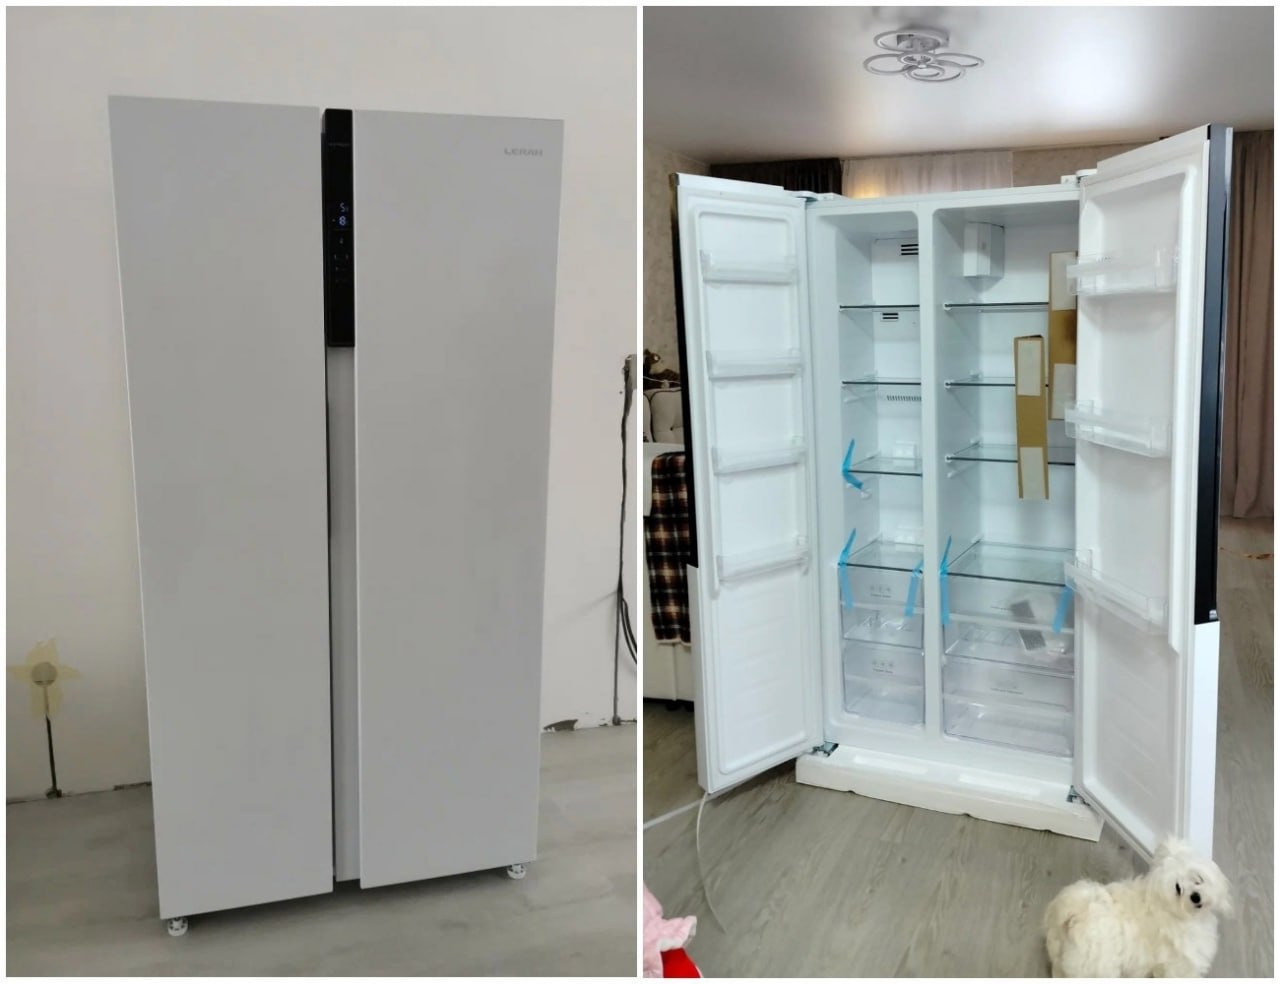 Морозильный шкаф леран fsf 232 w